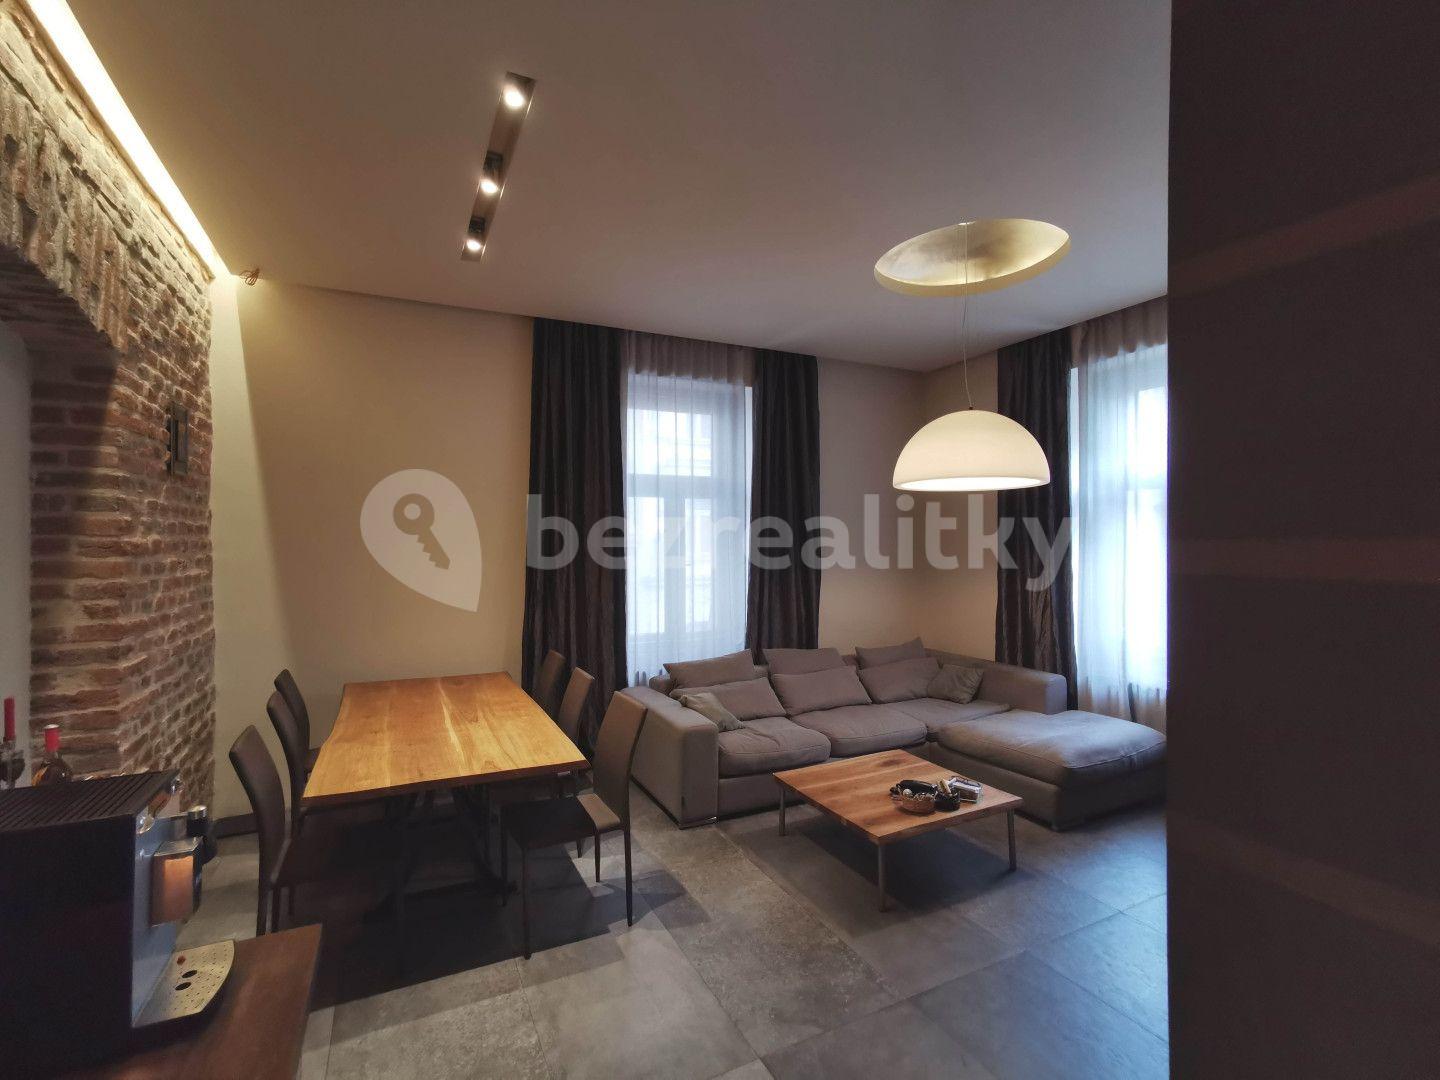 2 bedroom with open-plan kitchen flat for sale, 69 m², Na Celné, Prague, Prague